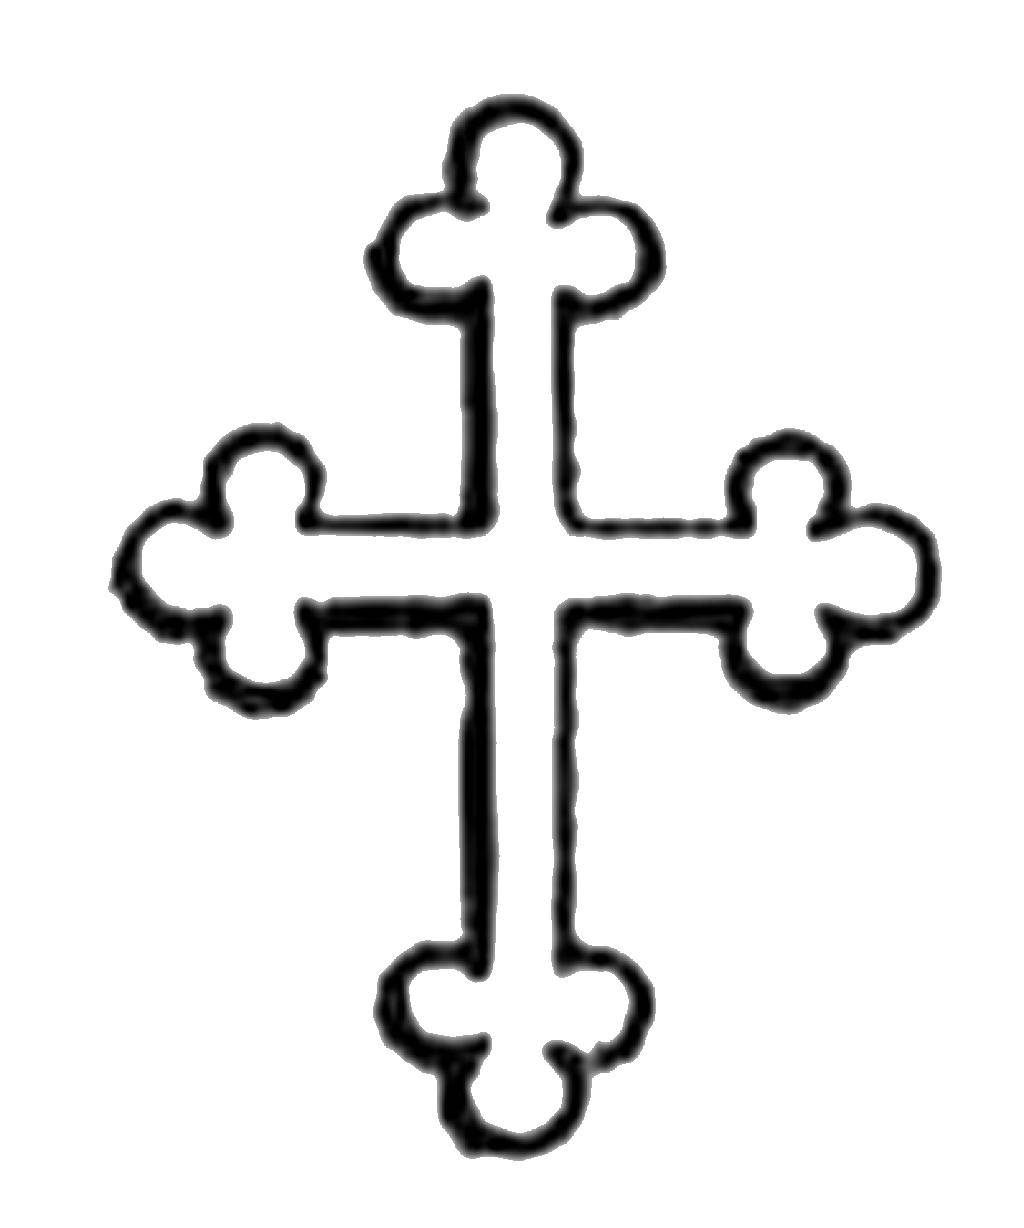 Coloring Cross.. Category Cross. Tags:  crosses, cross.